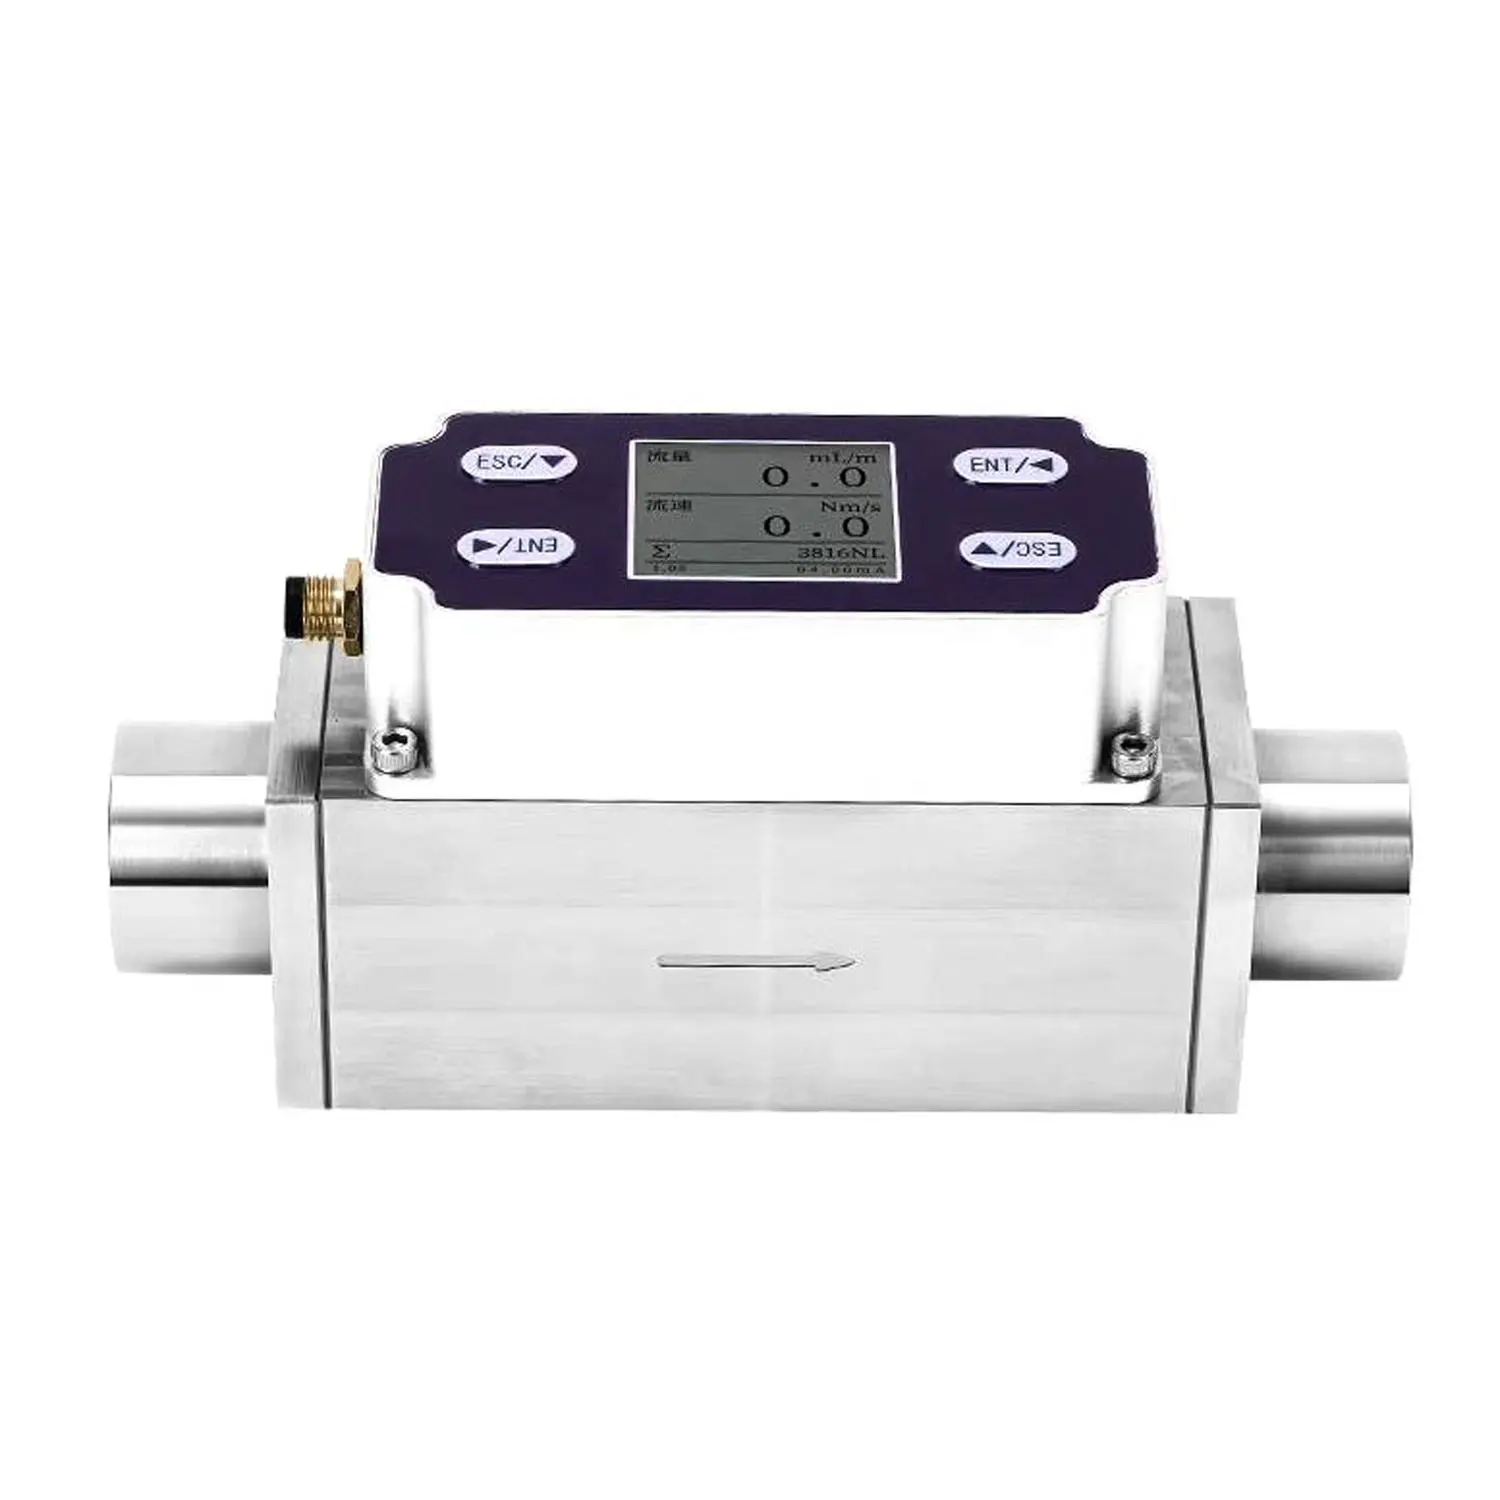 Esmf003 Micro Gas Massa Digitale Flowmeter, Het Kan Detecteren Waterstof, Stikstof, Argon, Zuurstof Etc